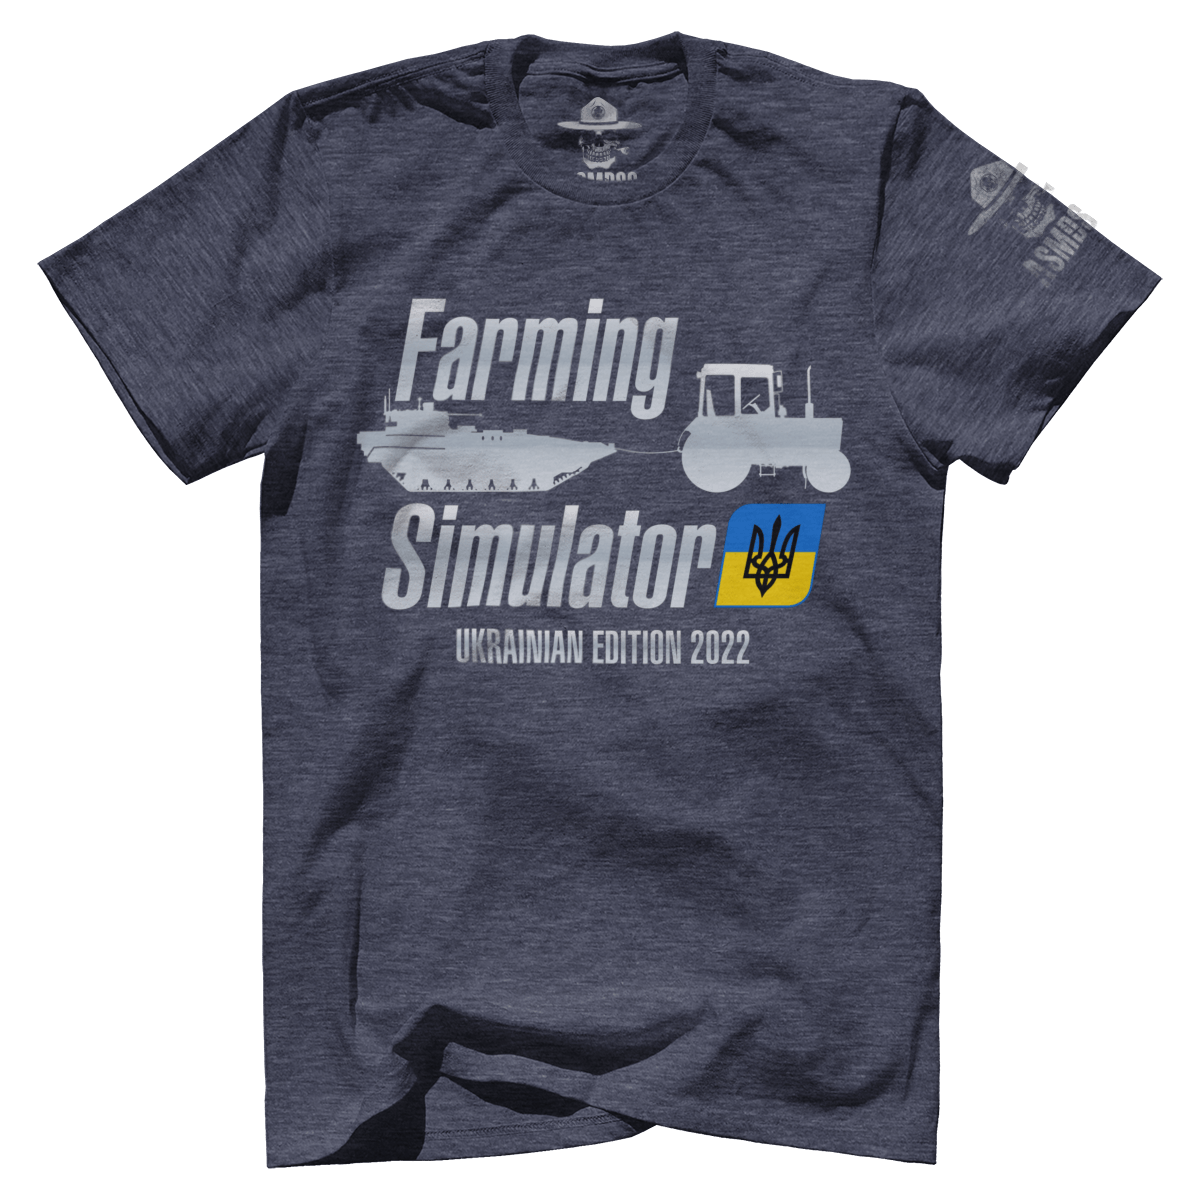 Farming Simulator Ukraine Edition